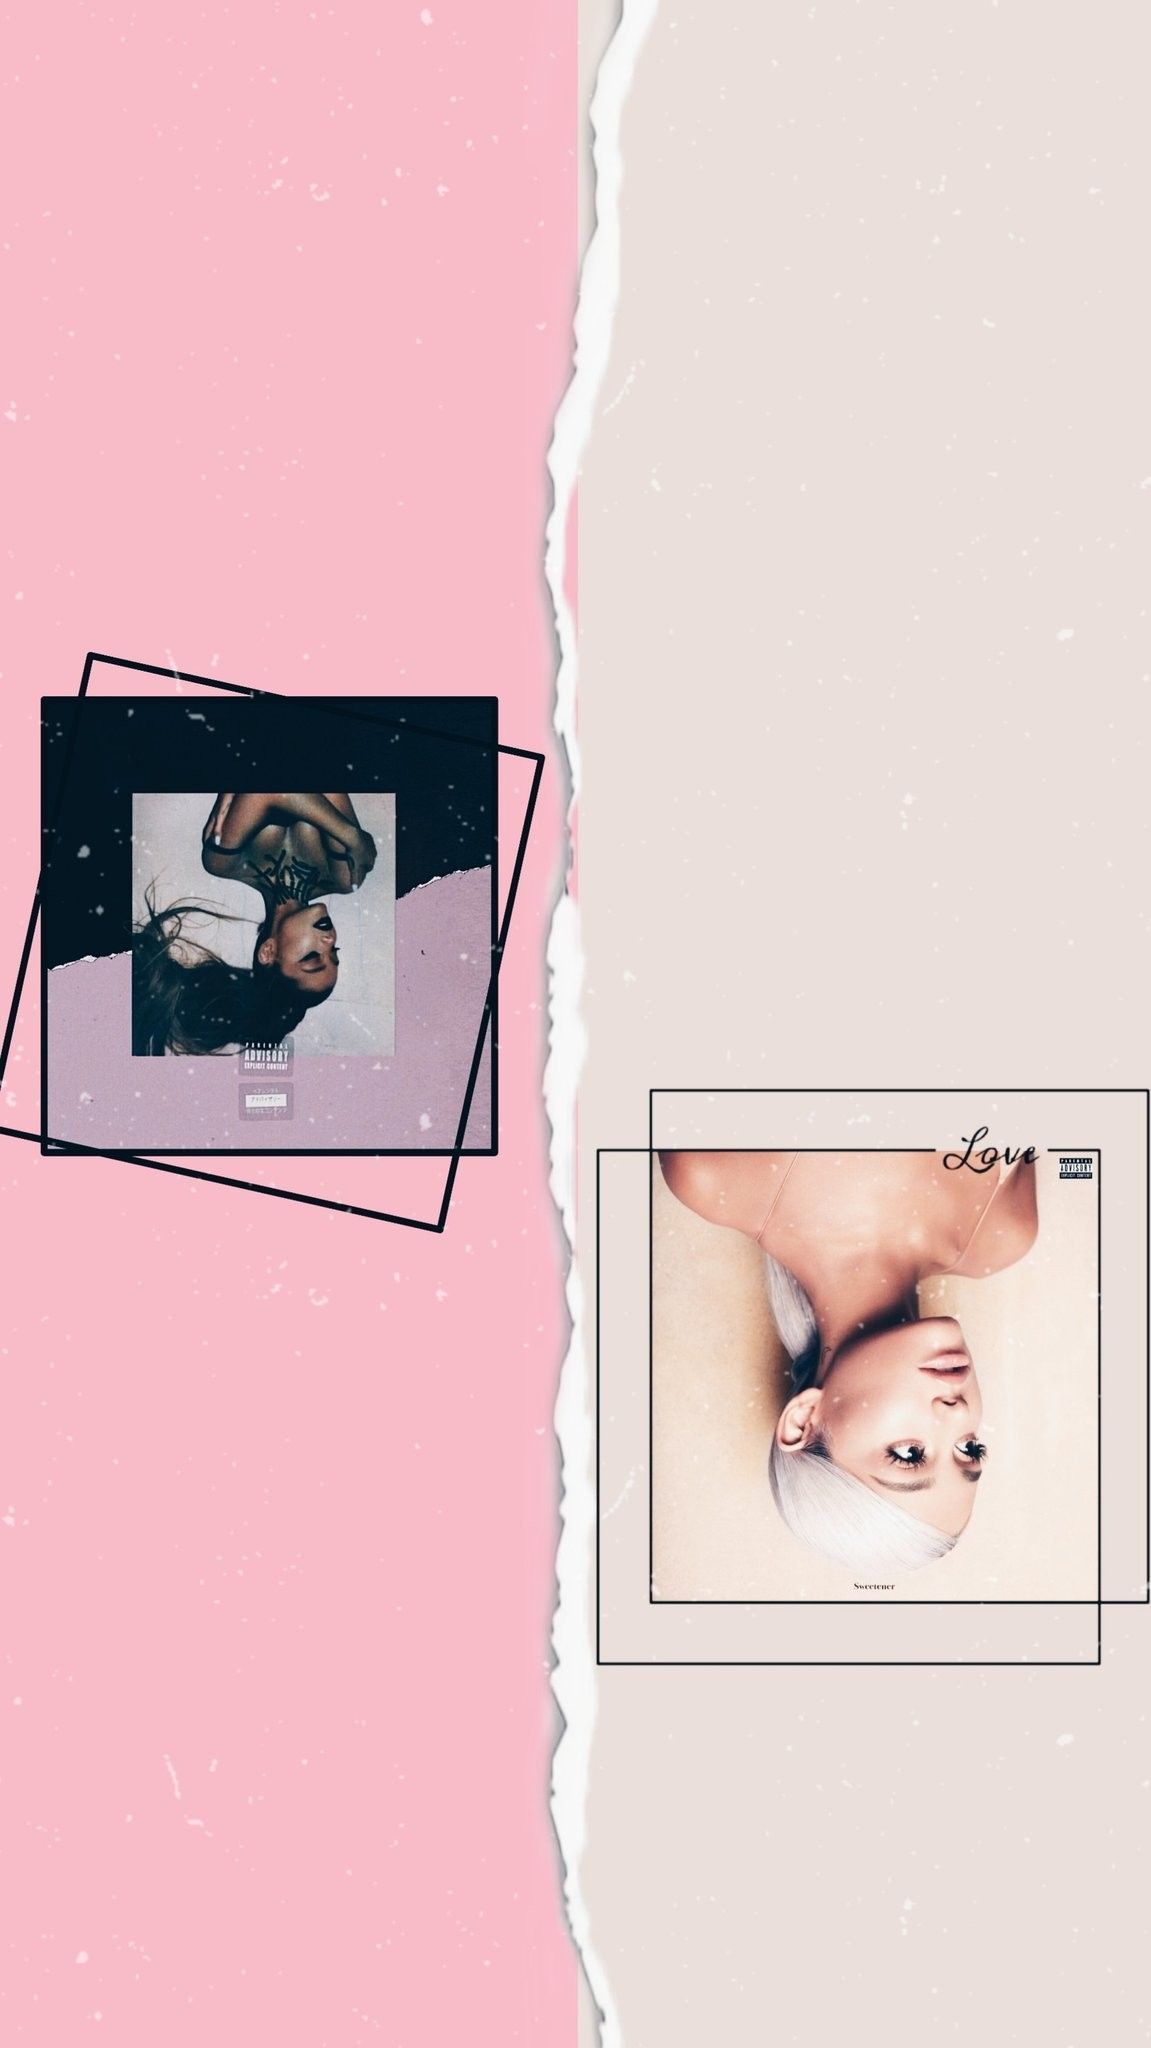 Thank u next vs sweetner album #arianagrande Thank u next vs sweetner album. Ariana grande wallpaper, Ariana grande background, Ariana grande